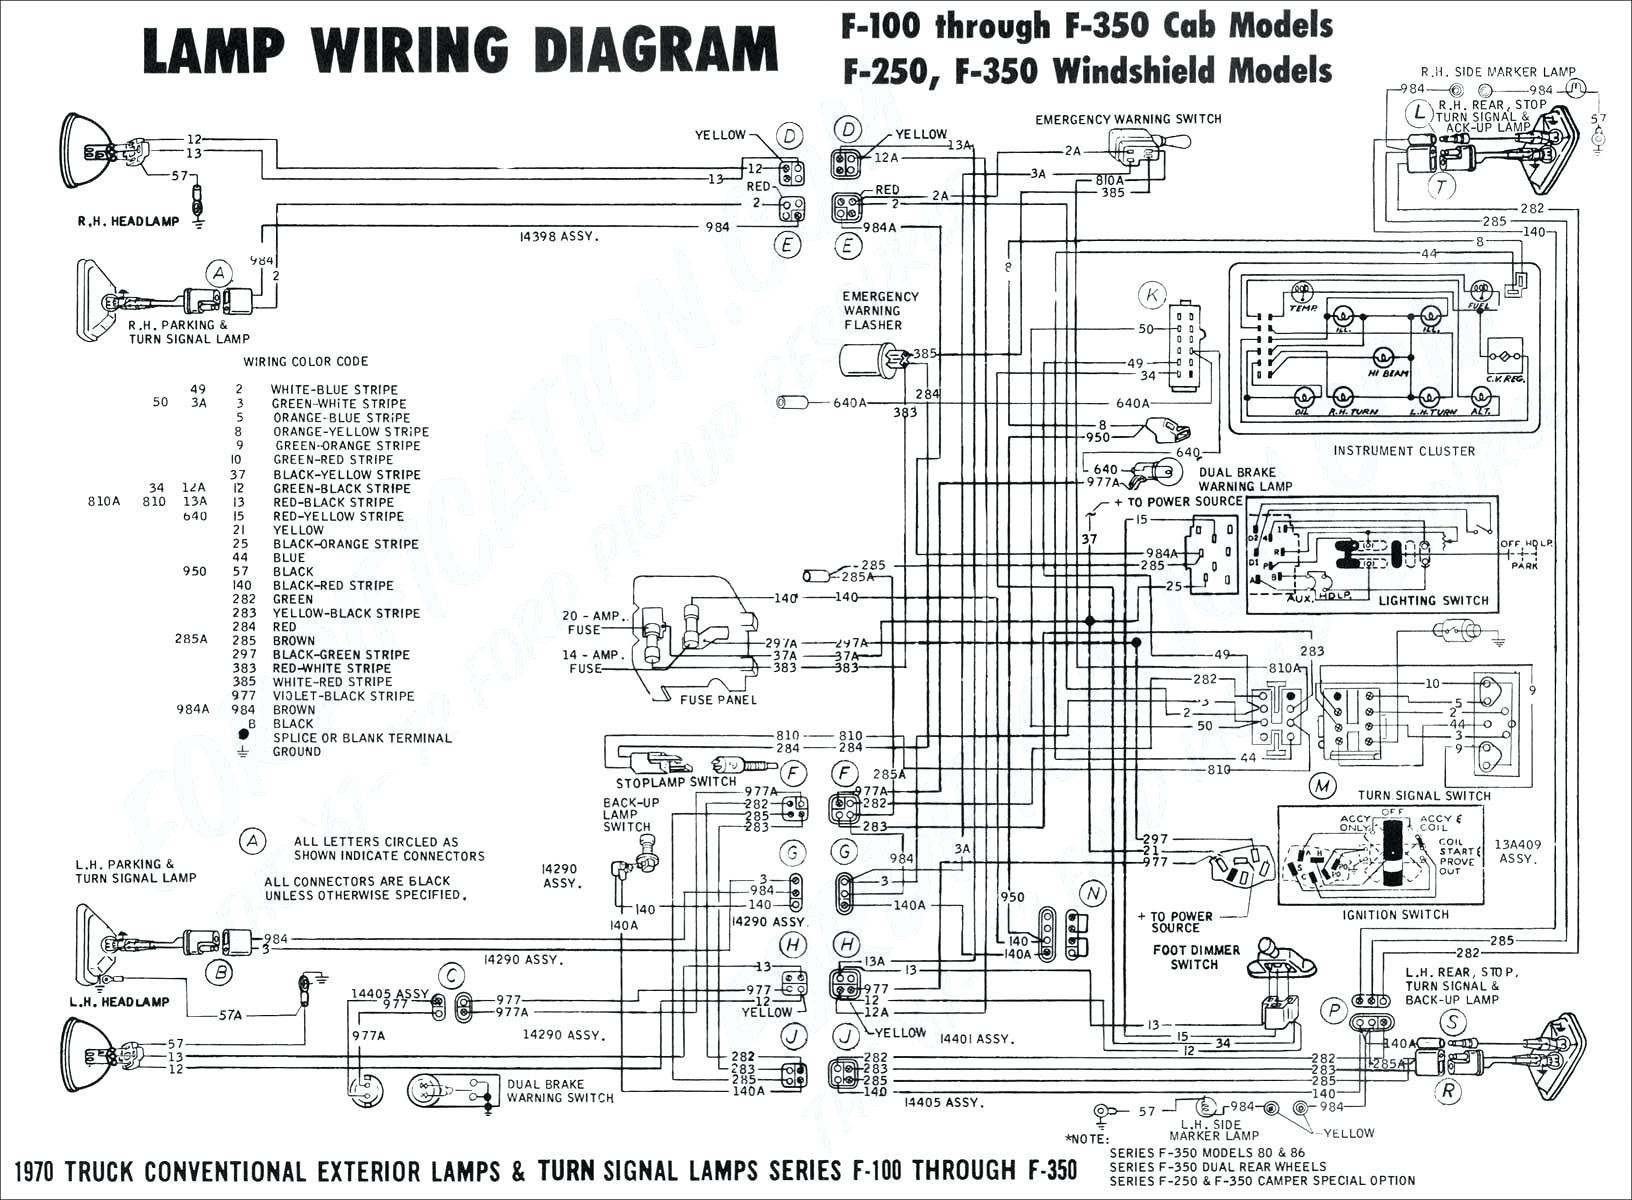 Wiring Diagram for Universal Turn Signal Switch Valid Wiring Diagrams for Turn Signal Best Stop Turn